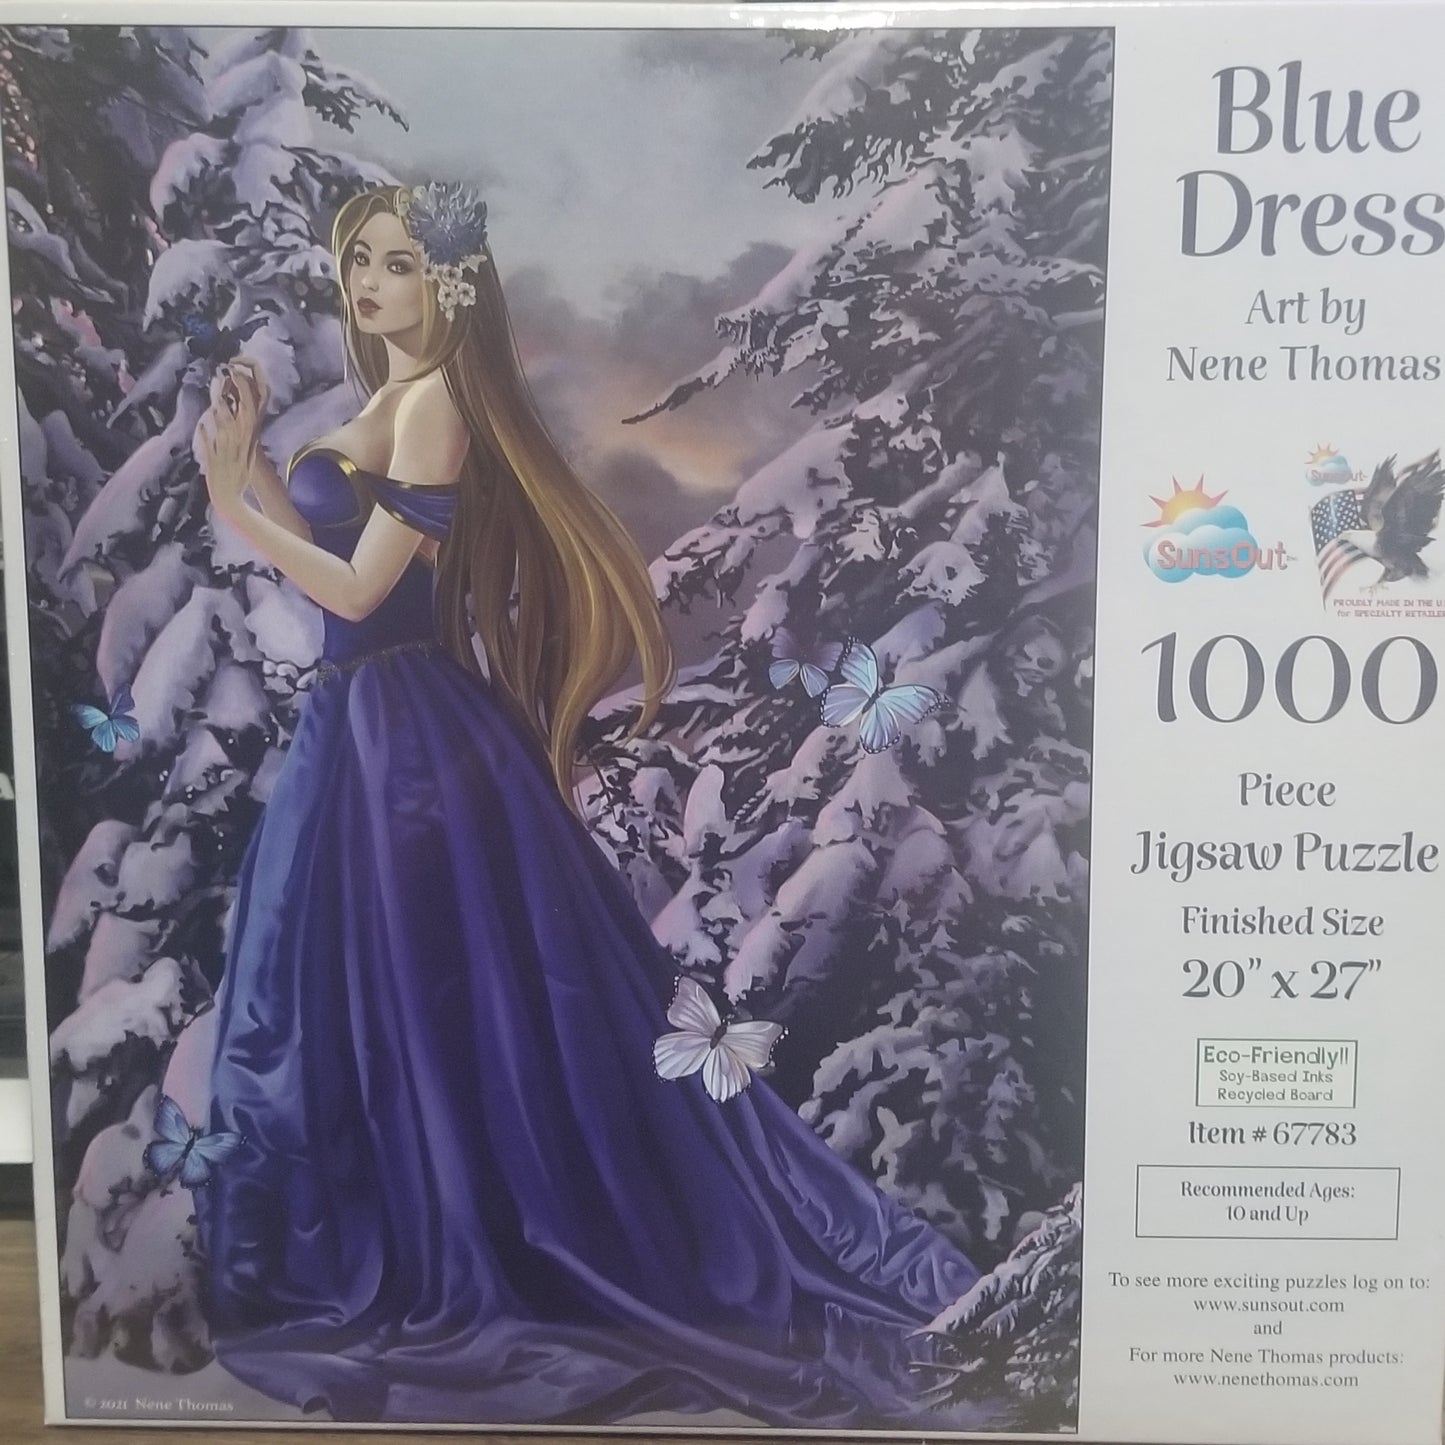 Blue Dress by Nene Thomas, 1000 Piece Puzzle